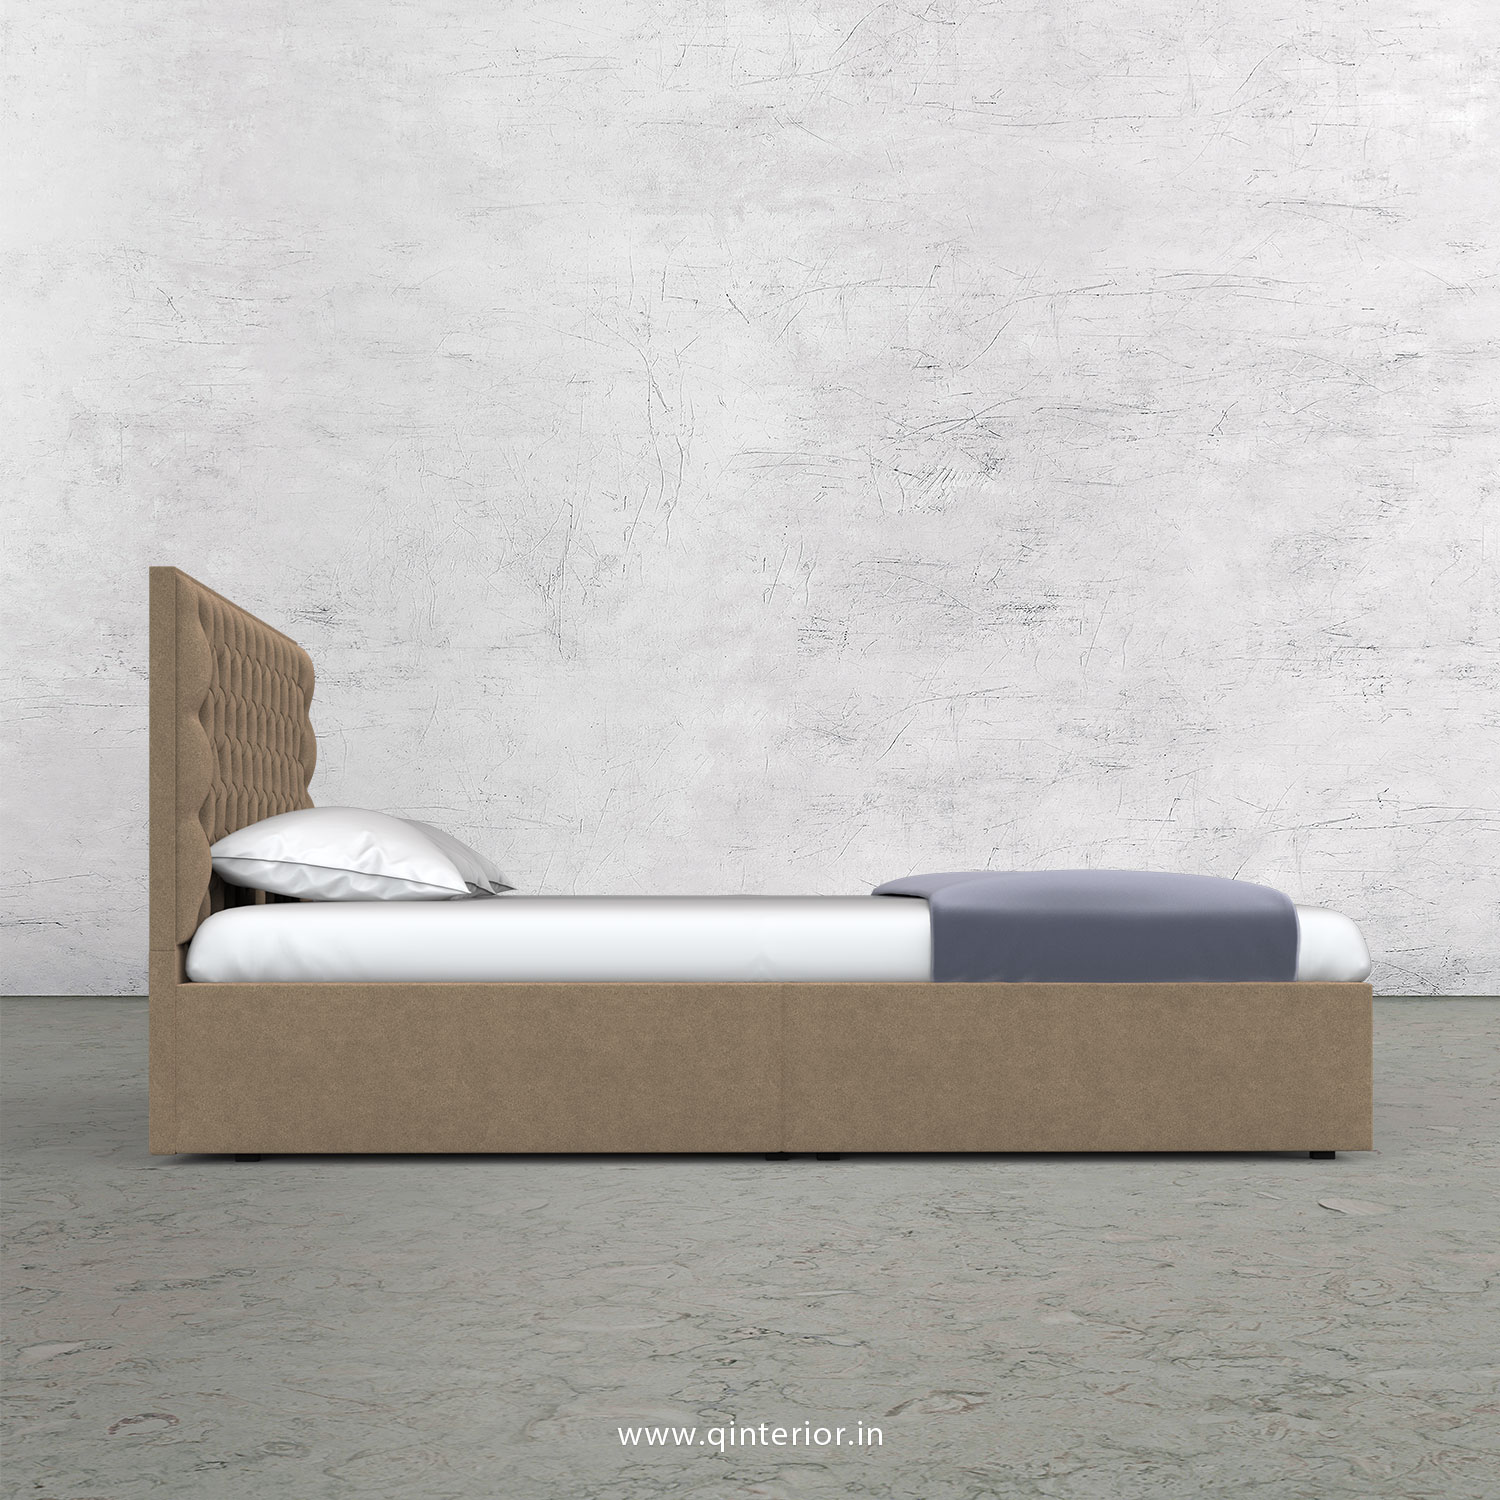 Orion King Size Storage Bed in Velvet Fabric - KBD001 VL03